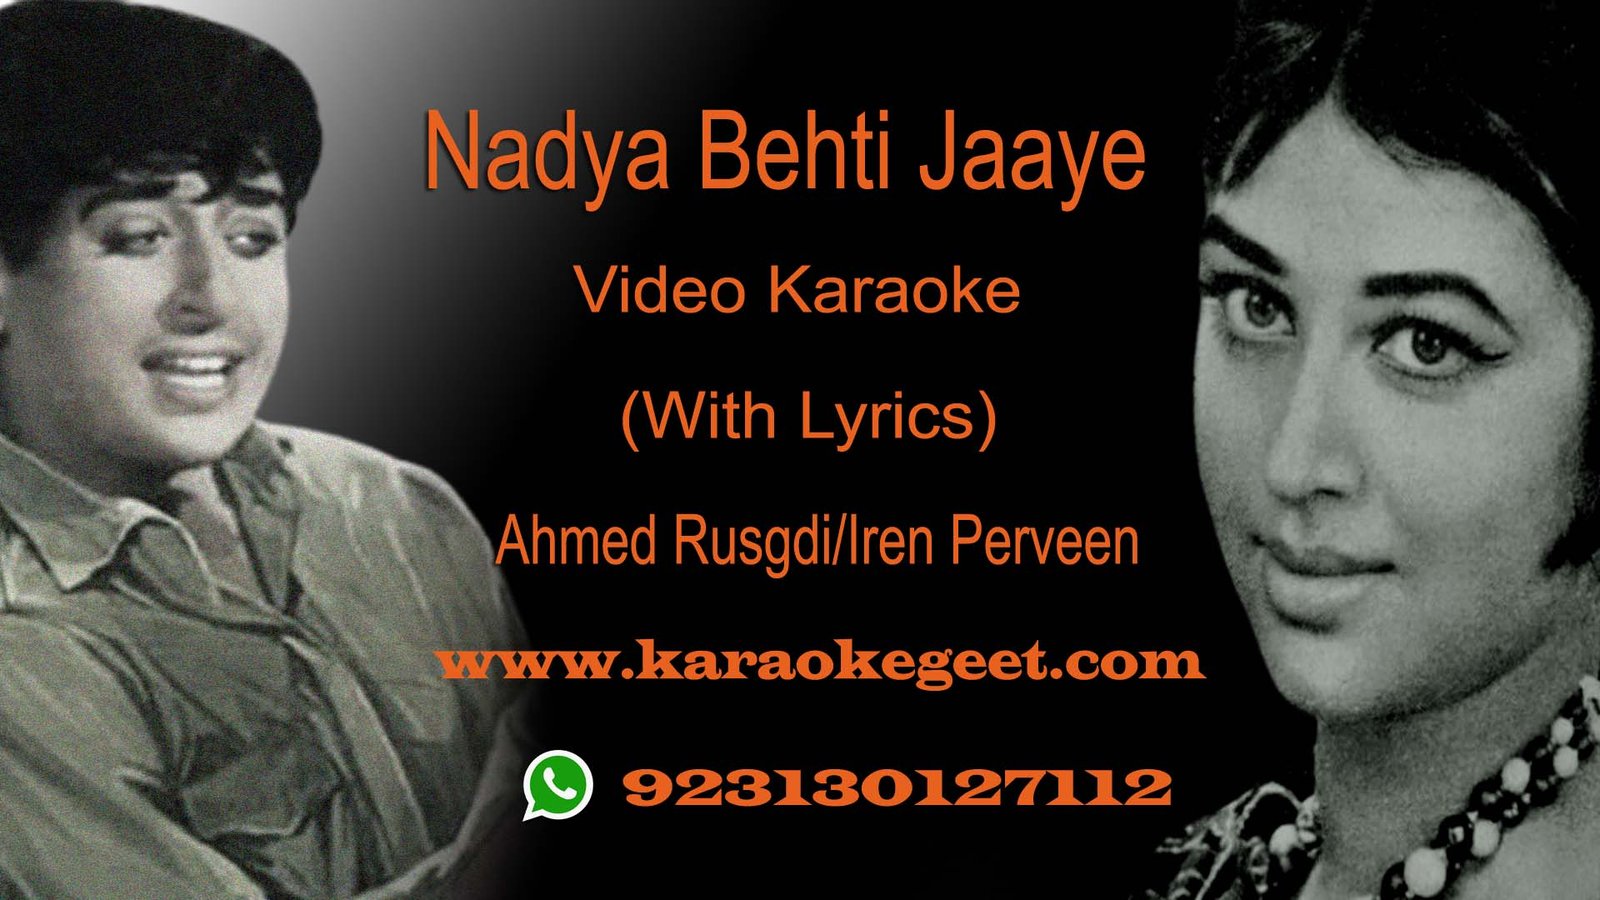 Nadiya Behti Jaye Behti Jaye Video Karaoke